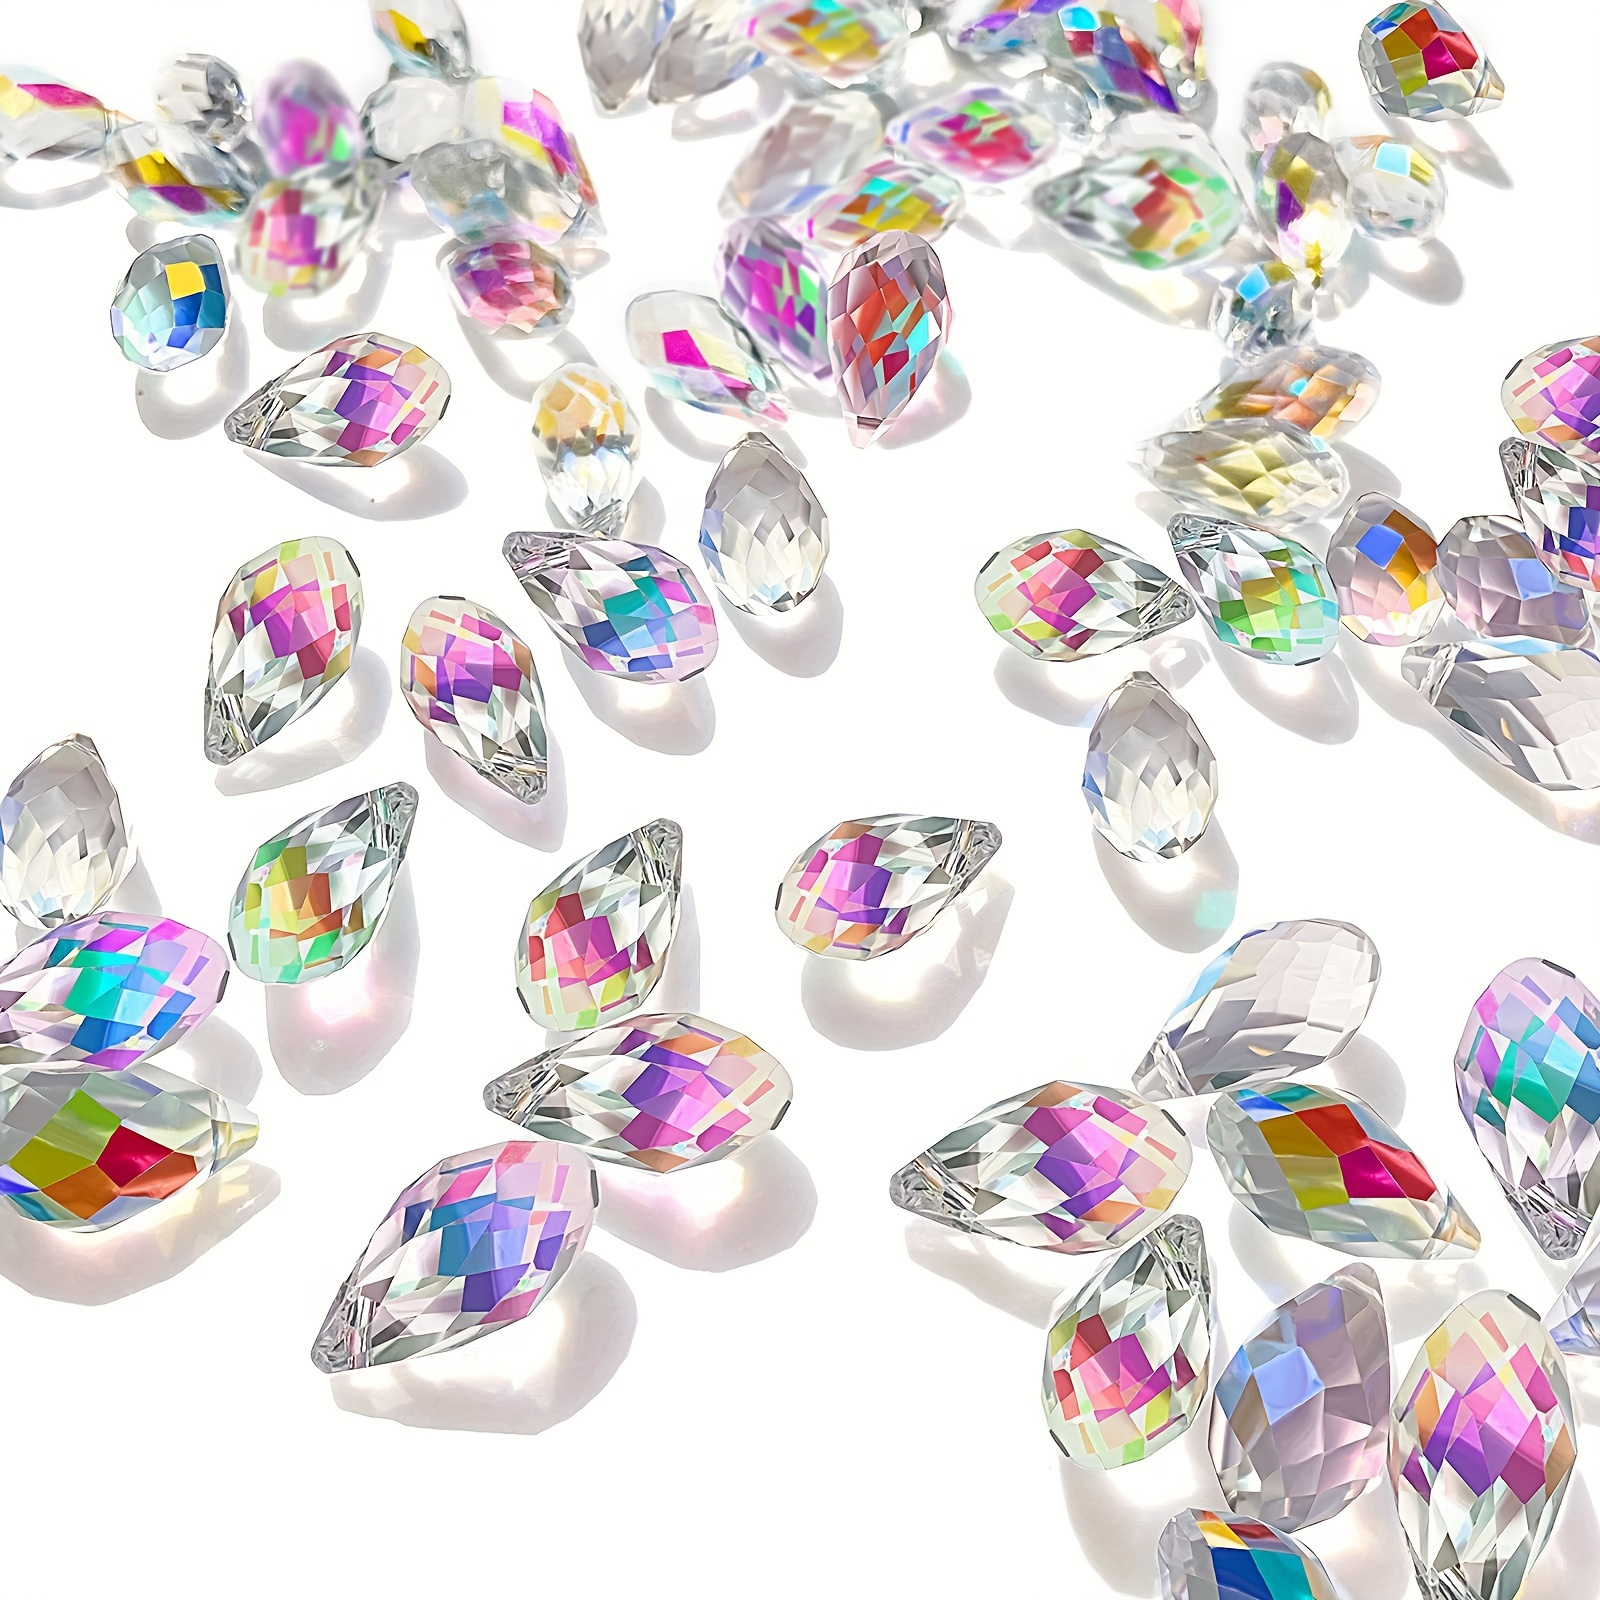 

About 100pcs Teardrop Shape Pendants, Imitation Crystal Pendant 6*12mm Ab Color Beads Pendants Jewelry Making Diy Supplies For Earrings Necklace Bracelet